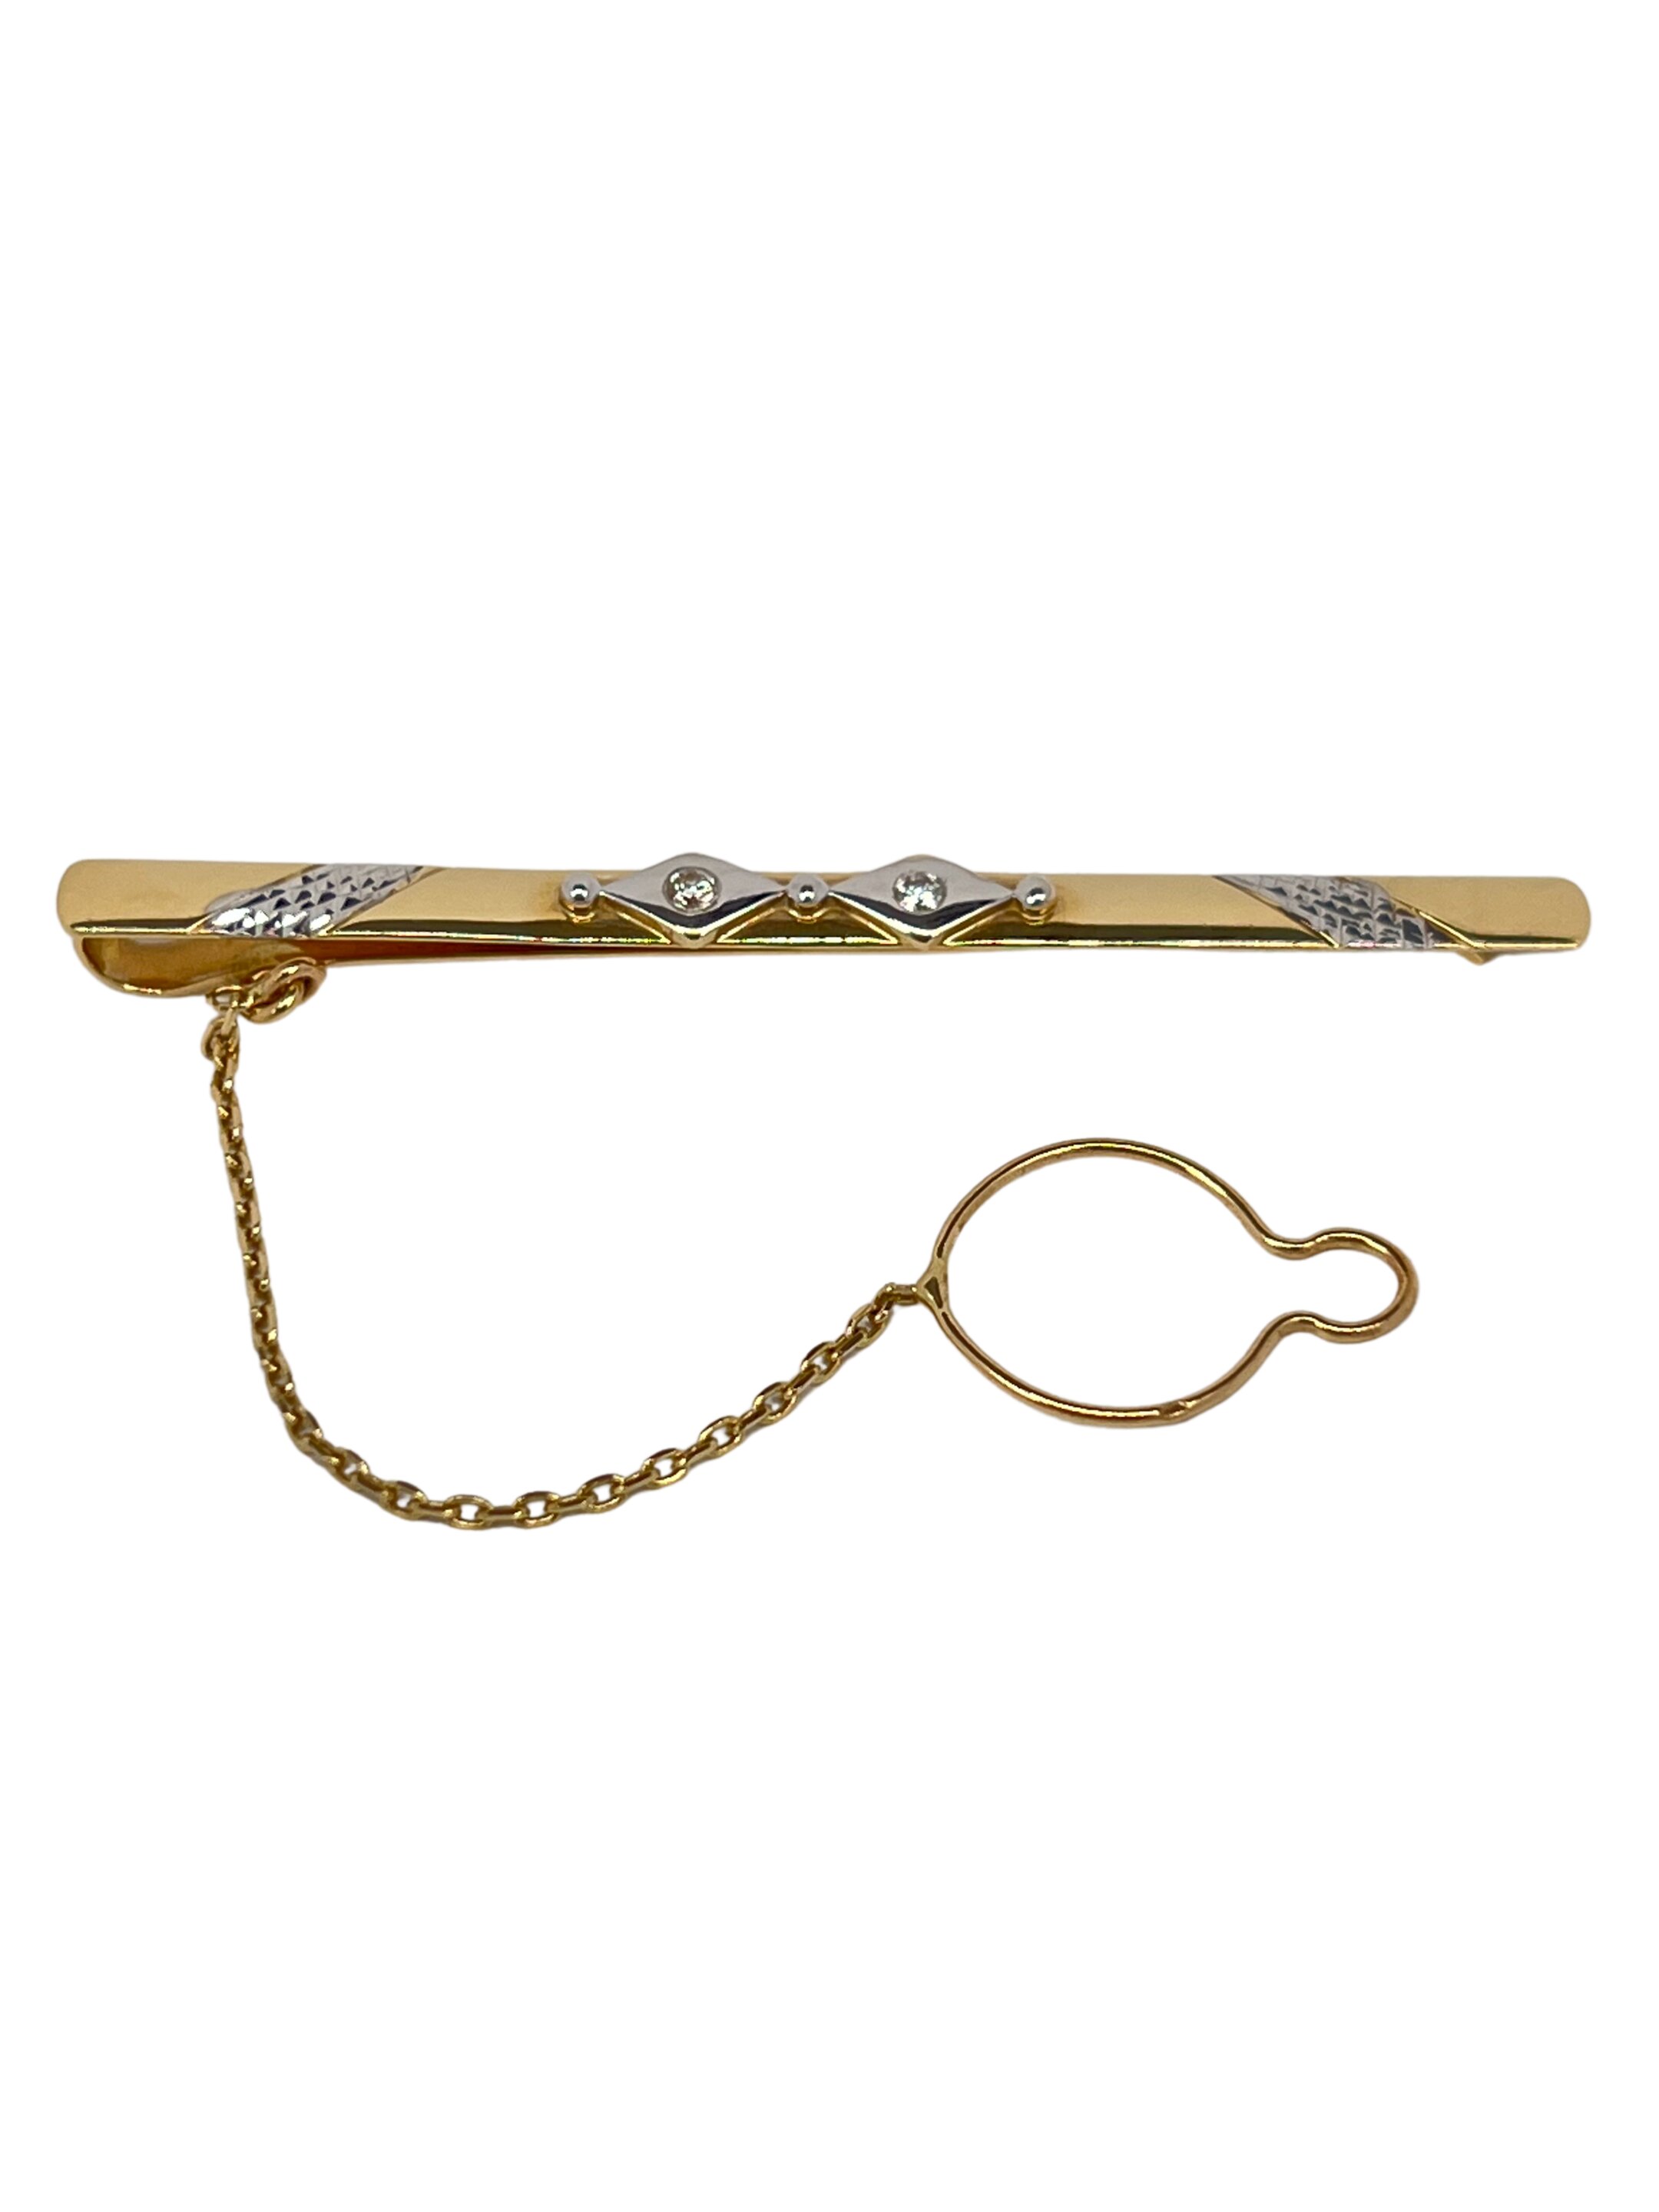 Zlatá spona na kravatu z kombinovaného zlata so vzorom a zirkónmi